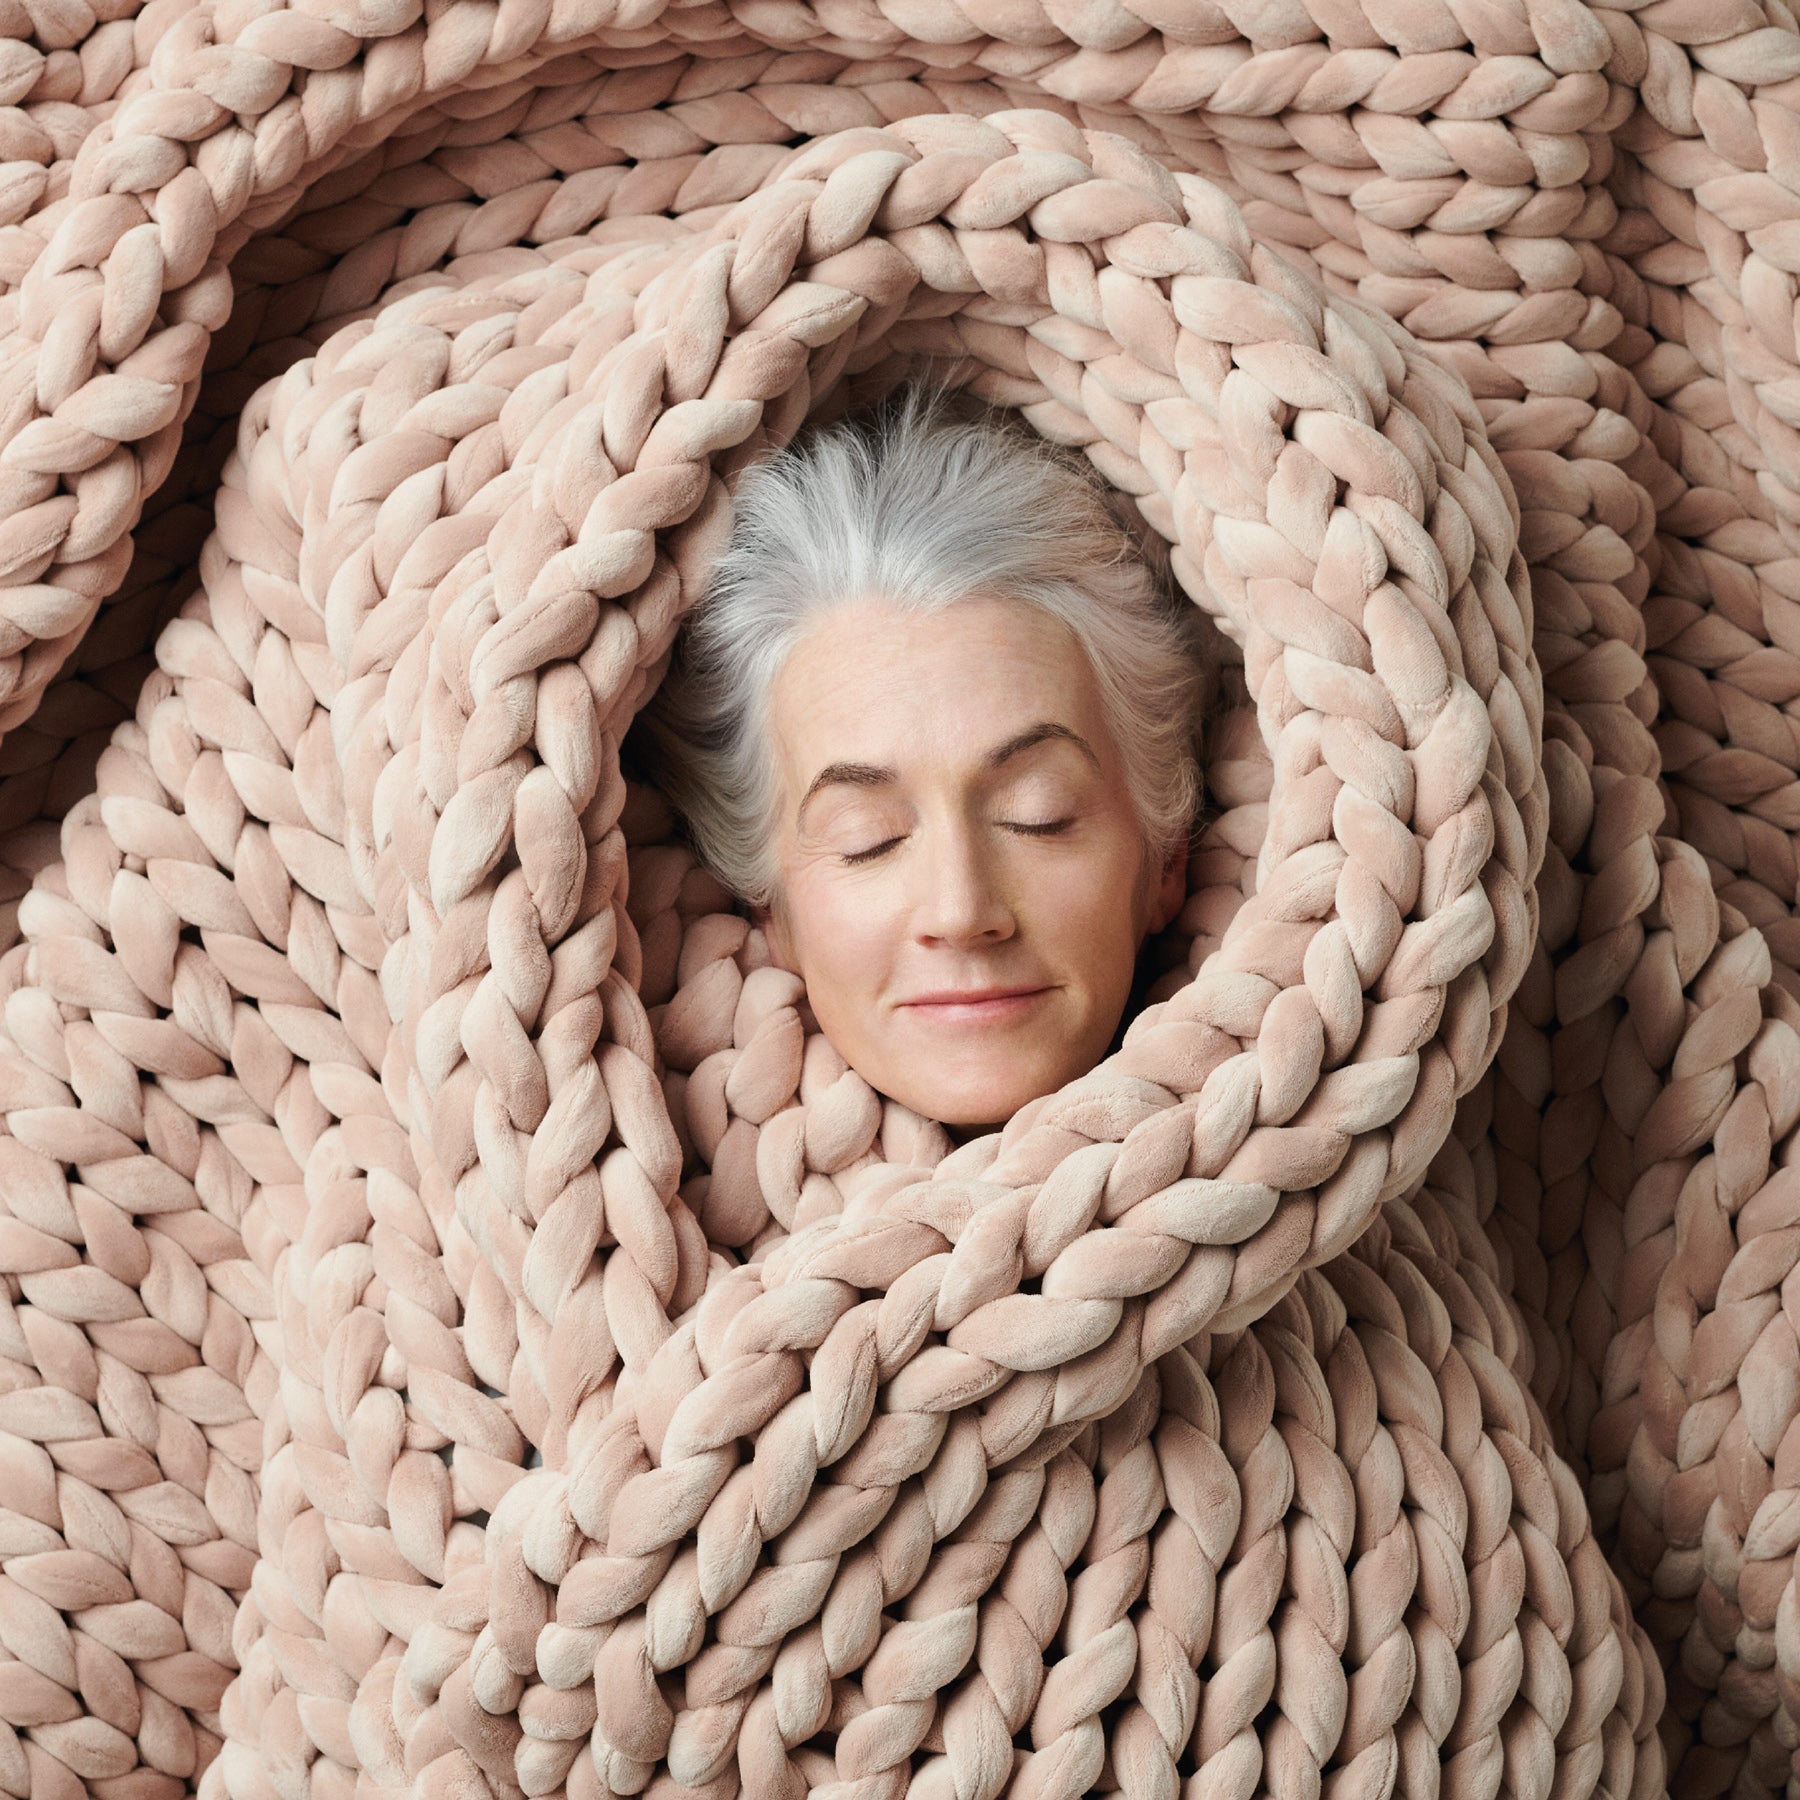 weighted blanket for elderly